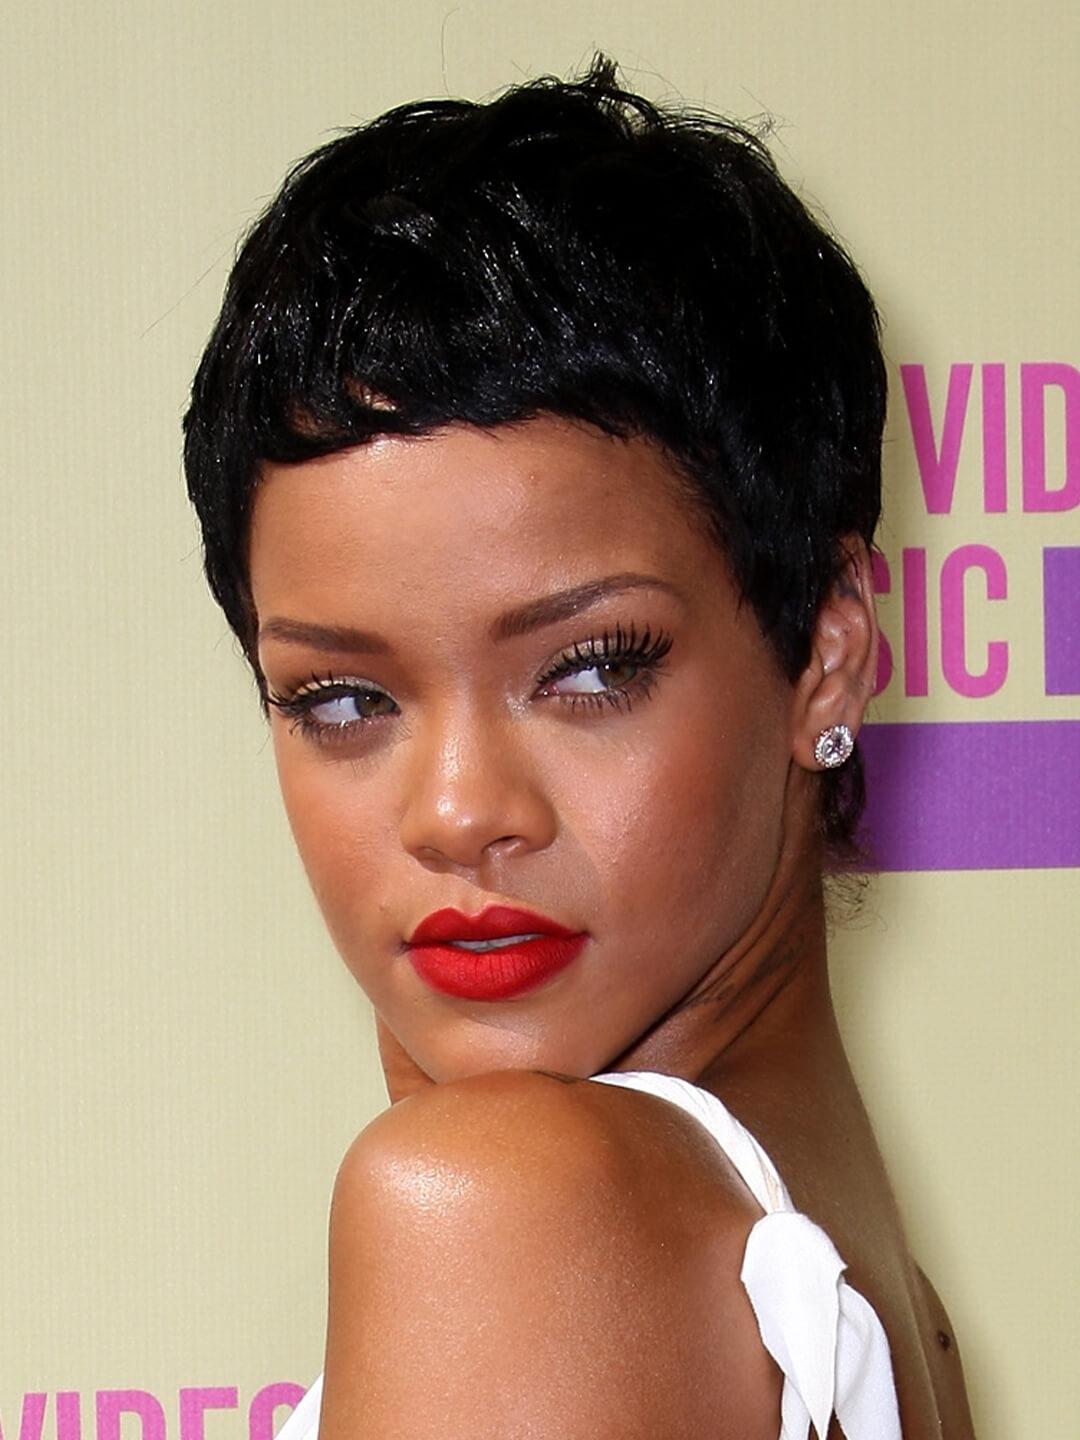 Rihanna rocking a classic pixie cut hairstyle